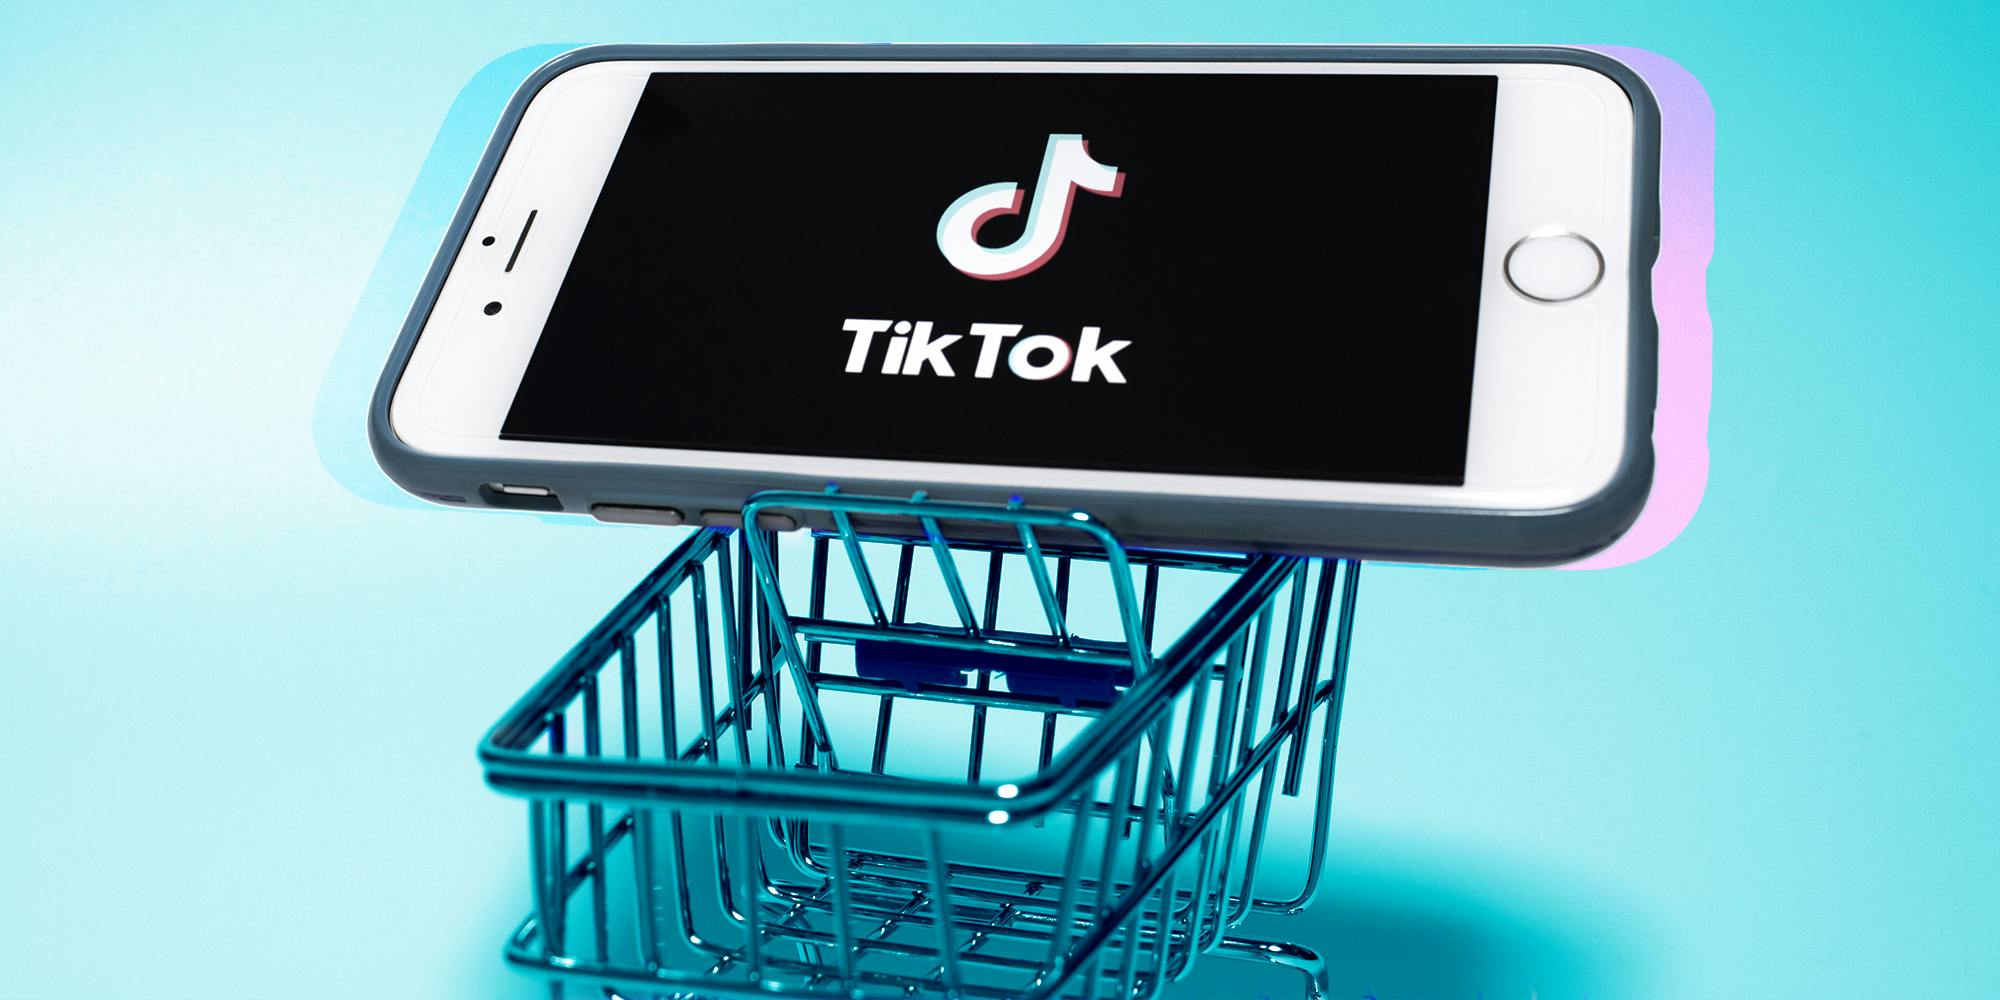 TikTok brand Logo on iPhone in miniature shopping cart